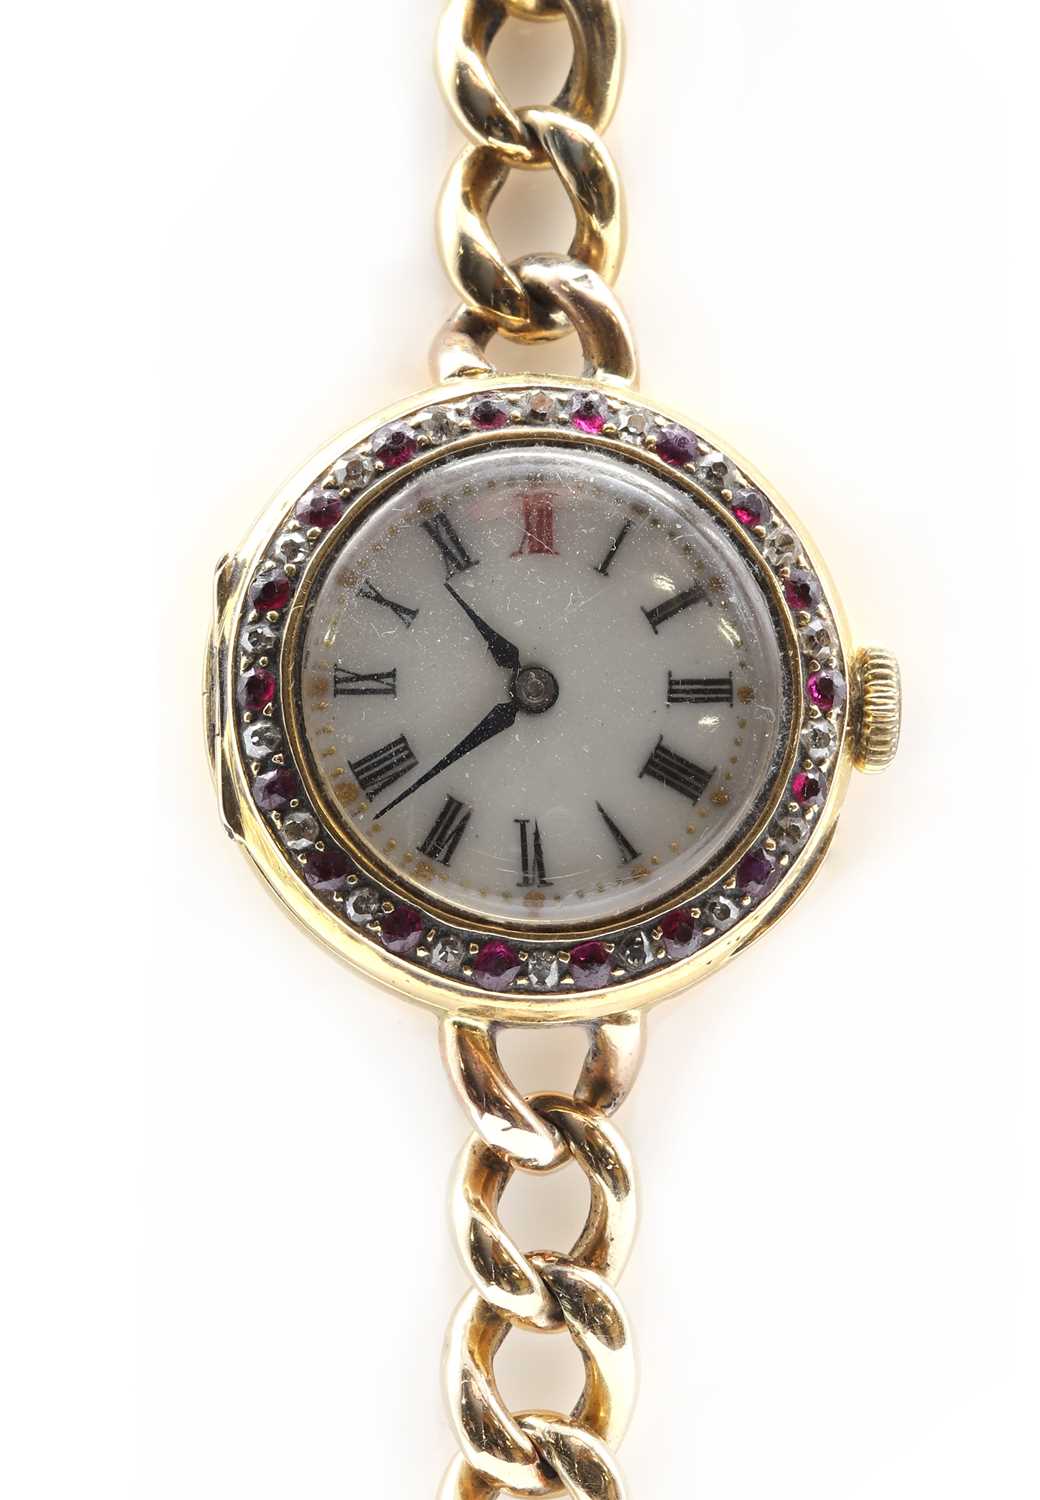 Lot A ladies' gold ruby and diamond set mechanical bracelet watch